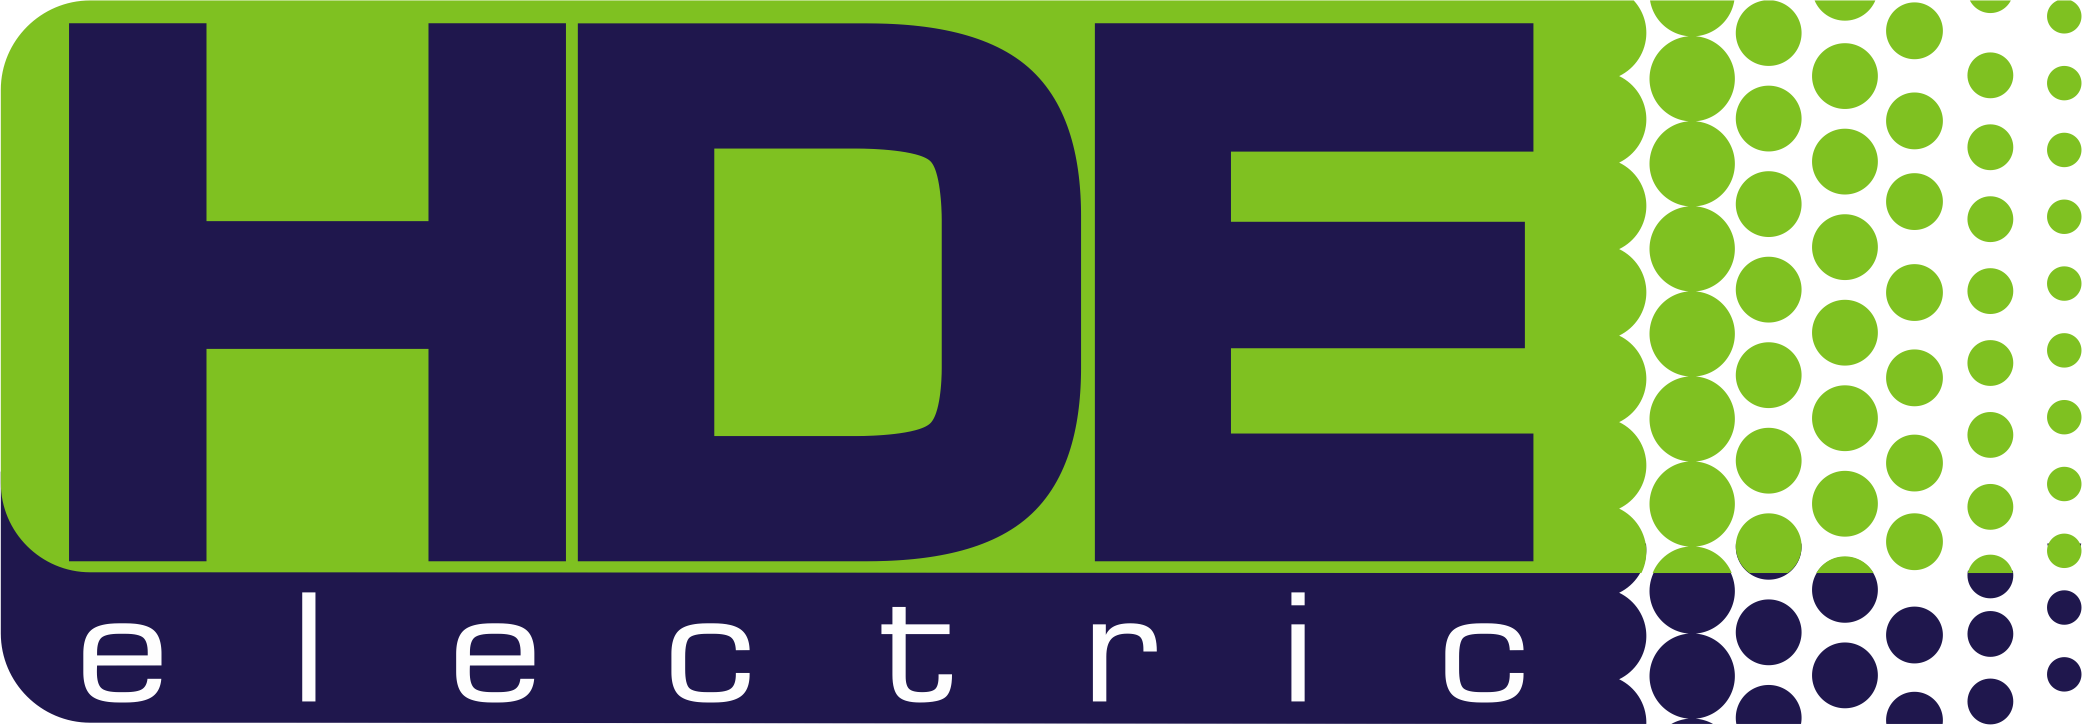 HDE logo COLOR